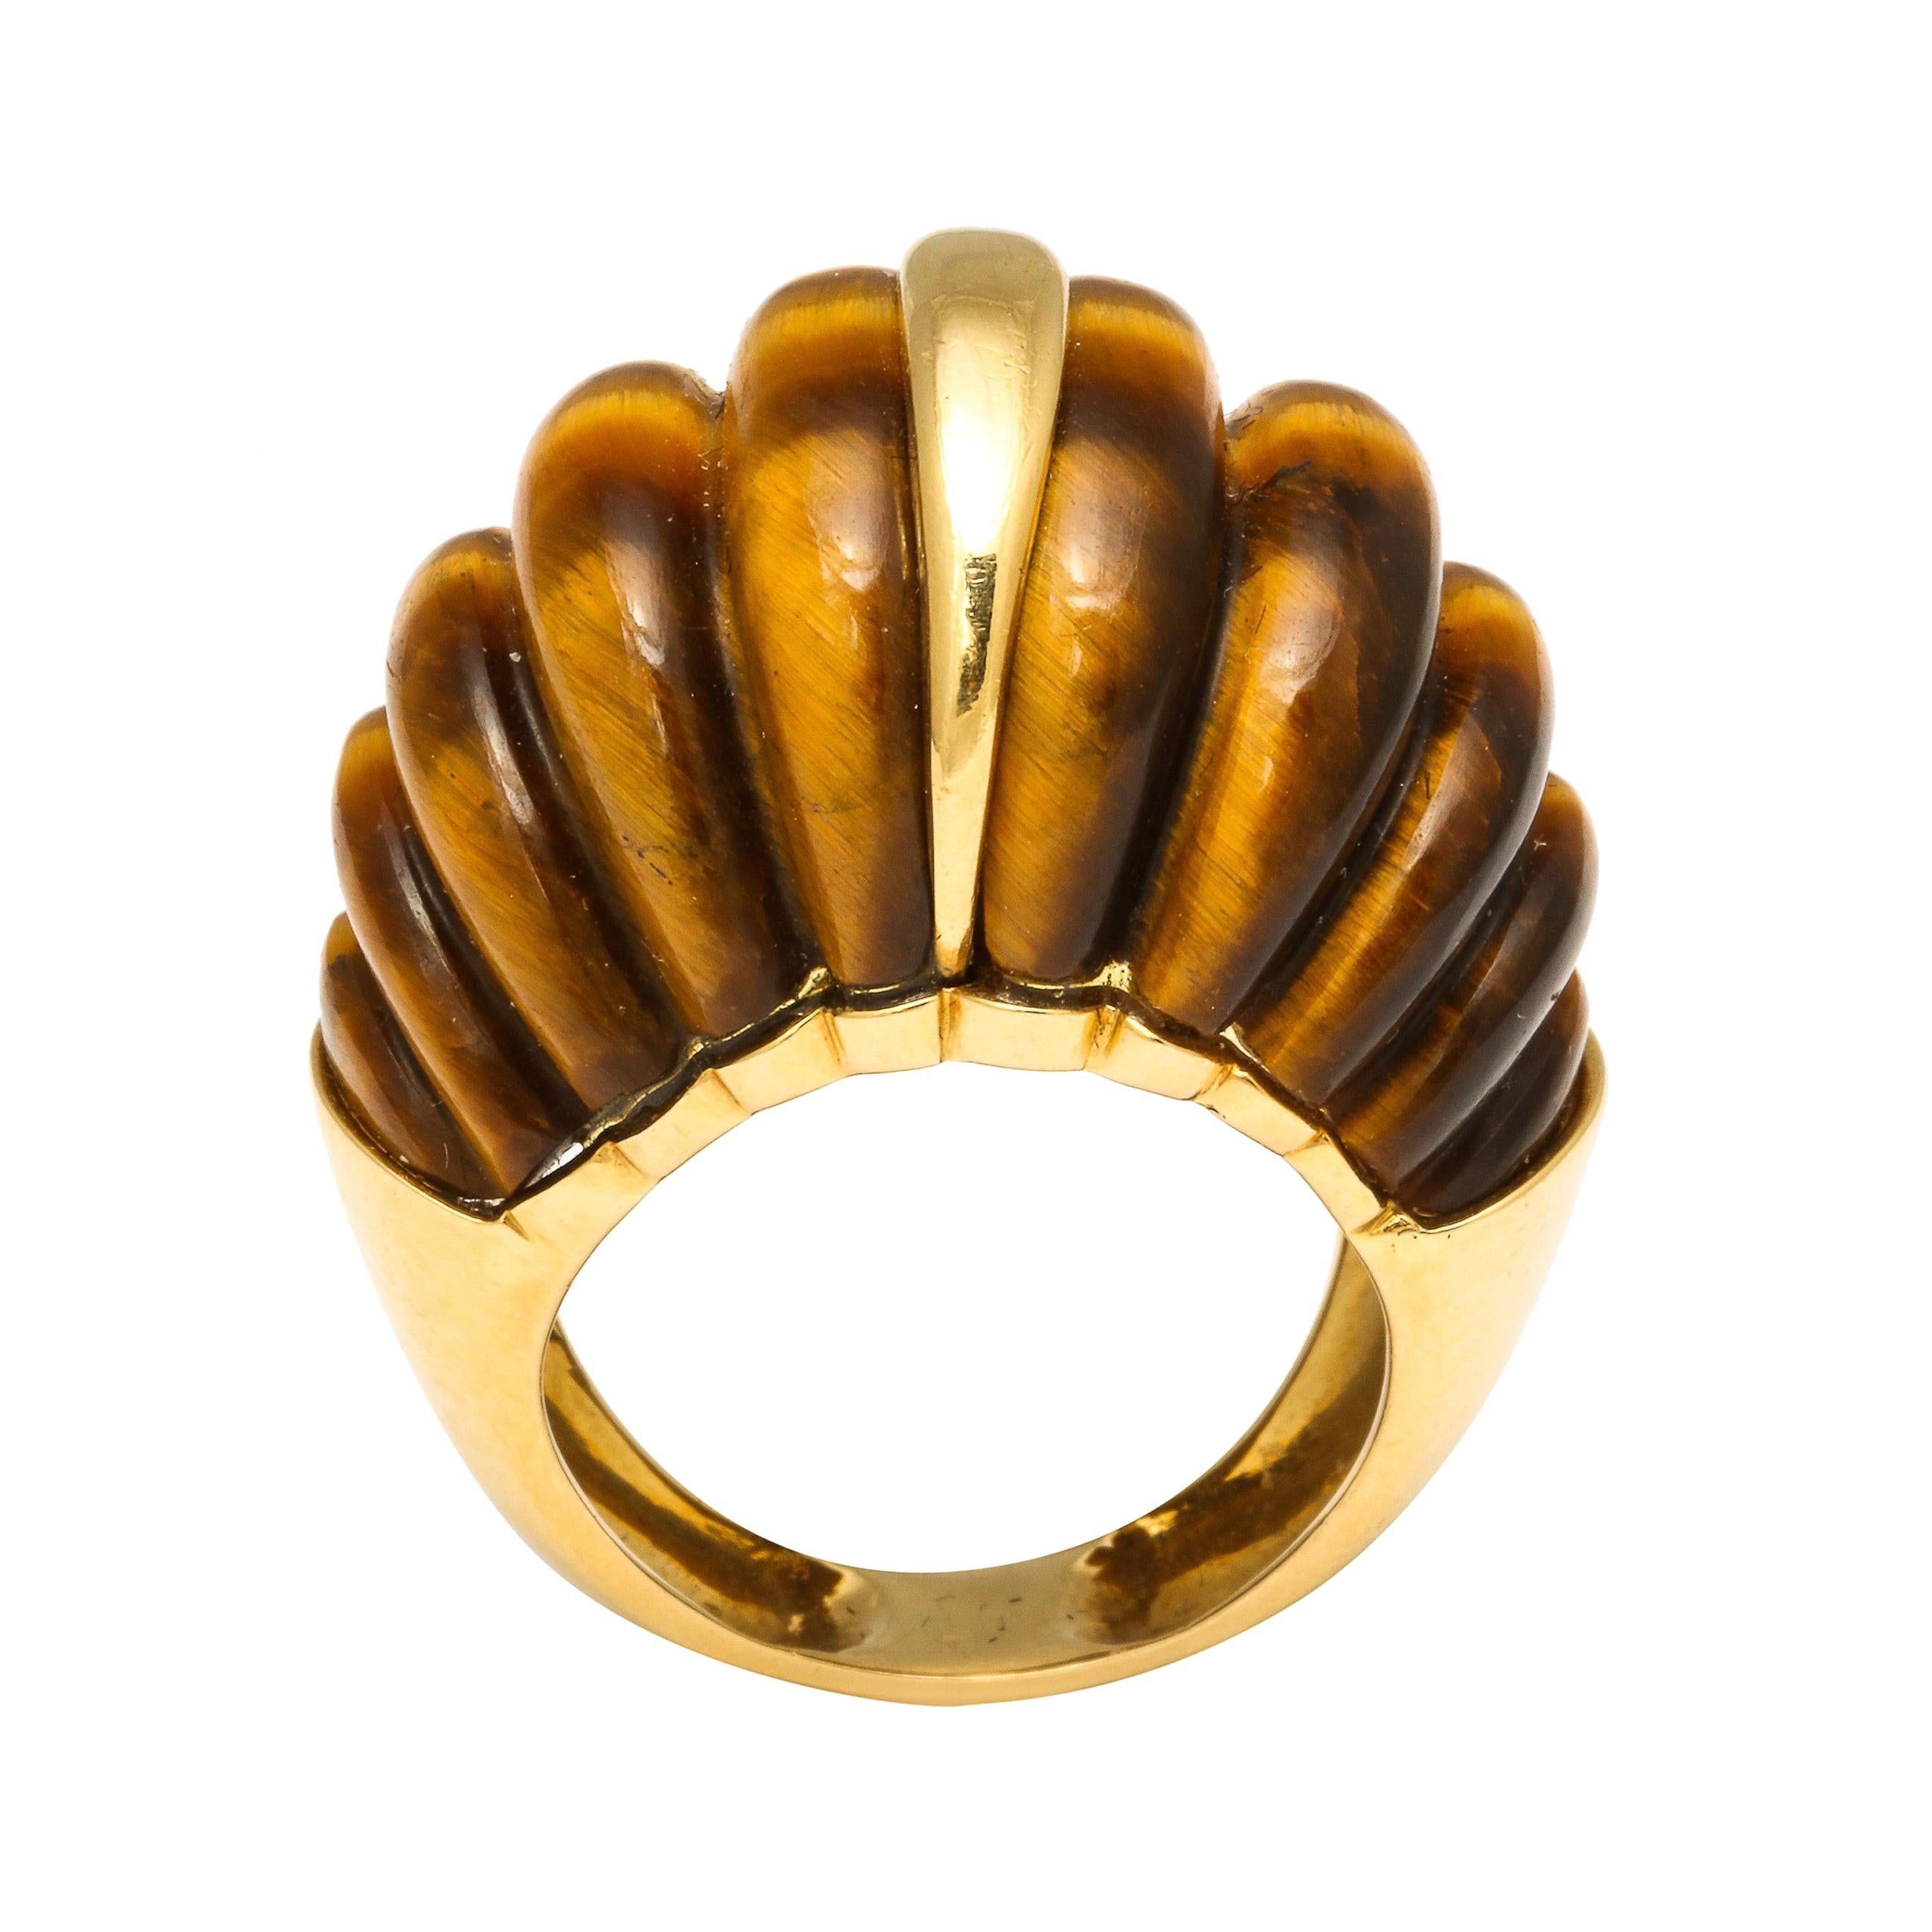 Tigerauge Melonenförmiger Ring mit Goldstange in der Mitte